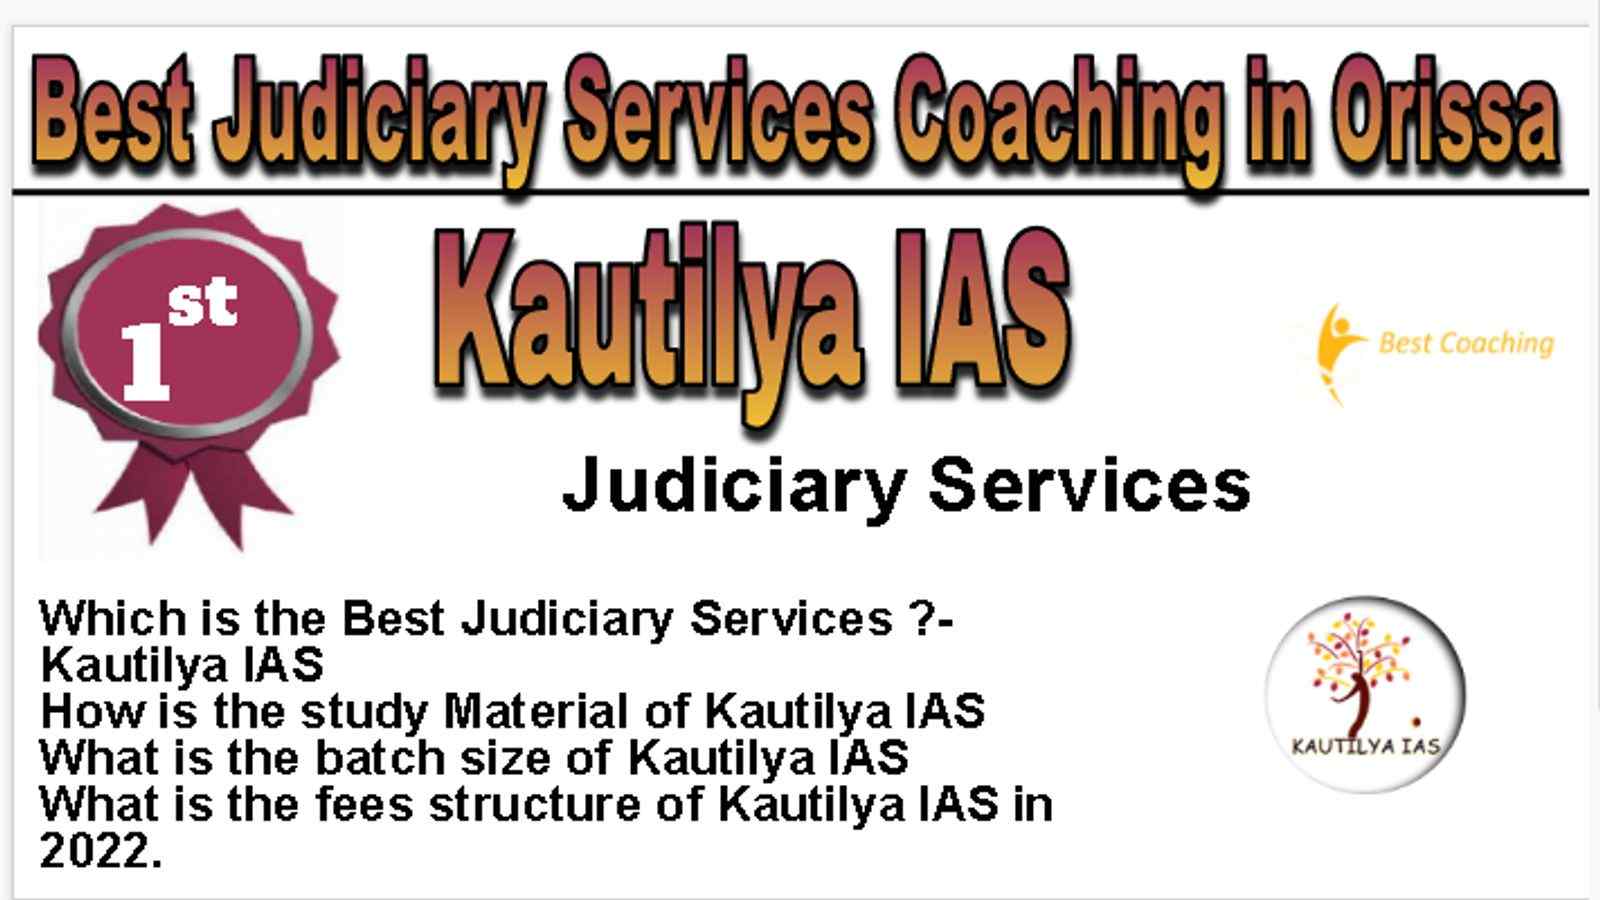 Rank 1 Best Judiciary Services Coaching in Orissa